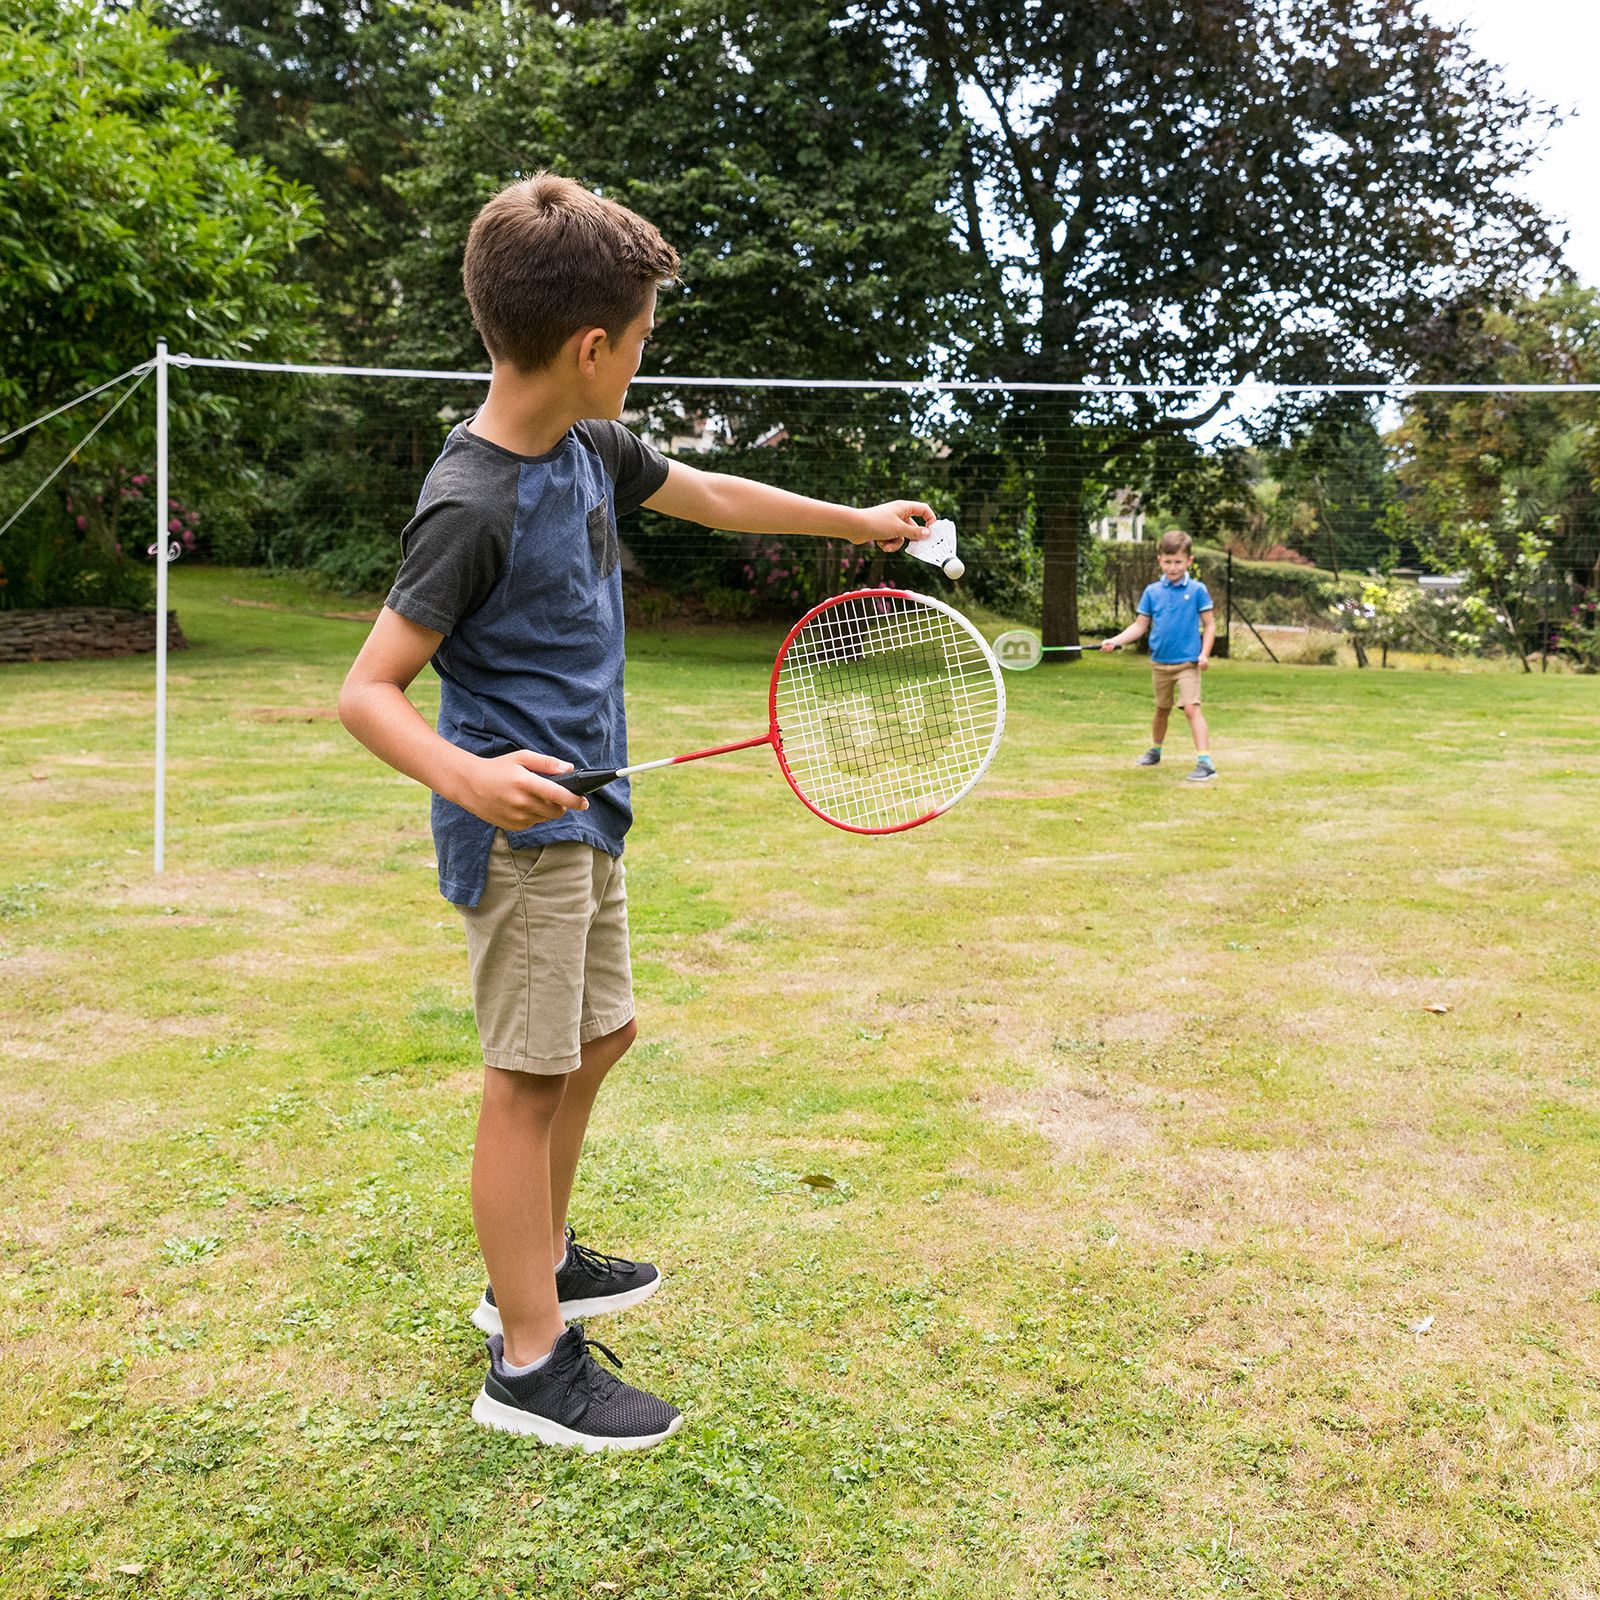 Details about   Tennis Badminton Set Garden Family Racket Play Fun Kid Outdoor Game Net Poles US 